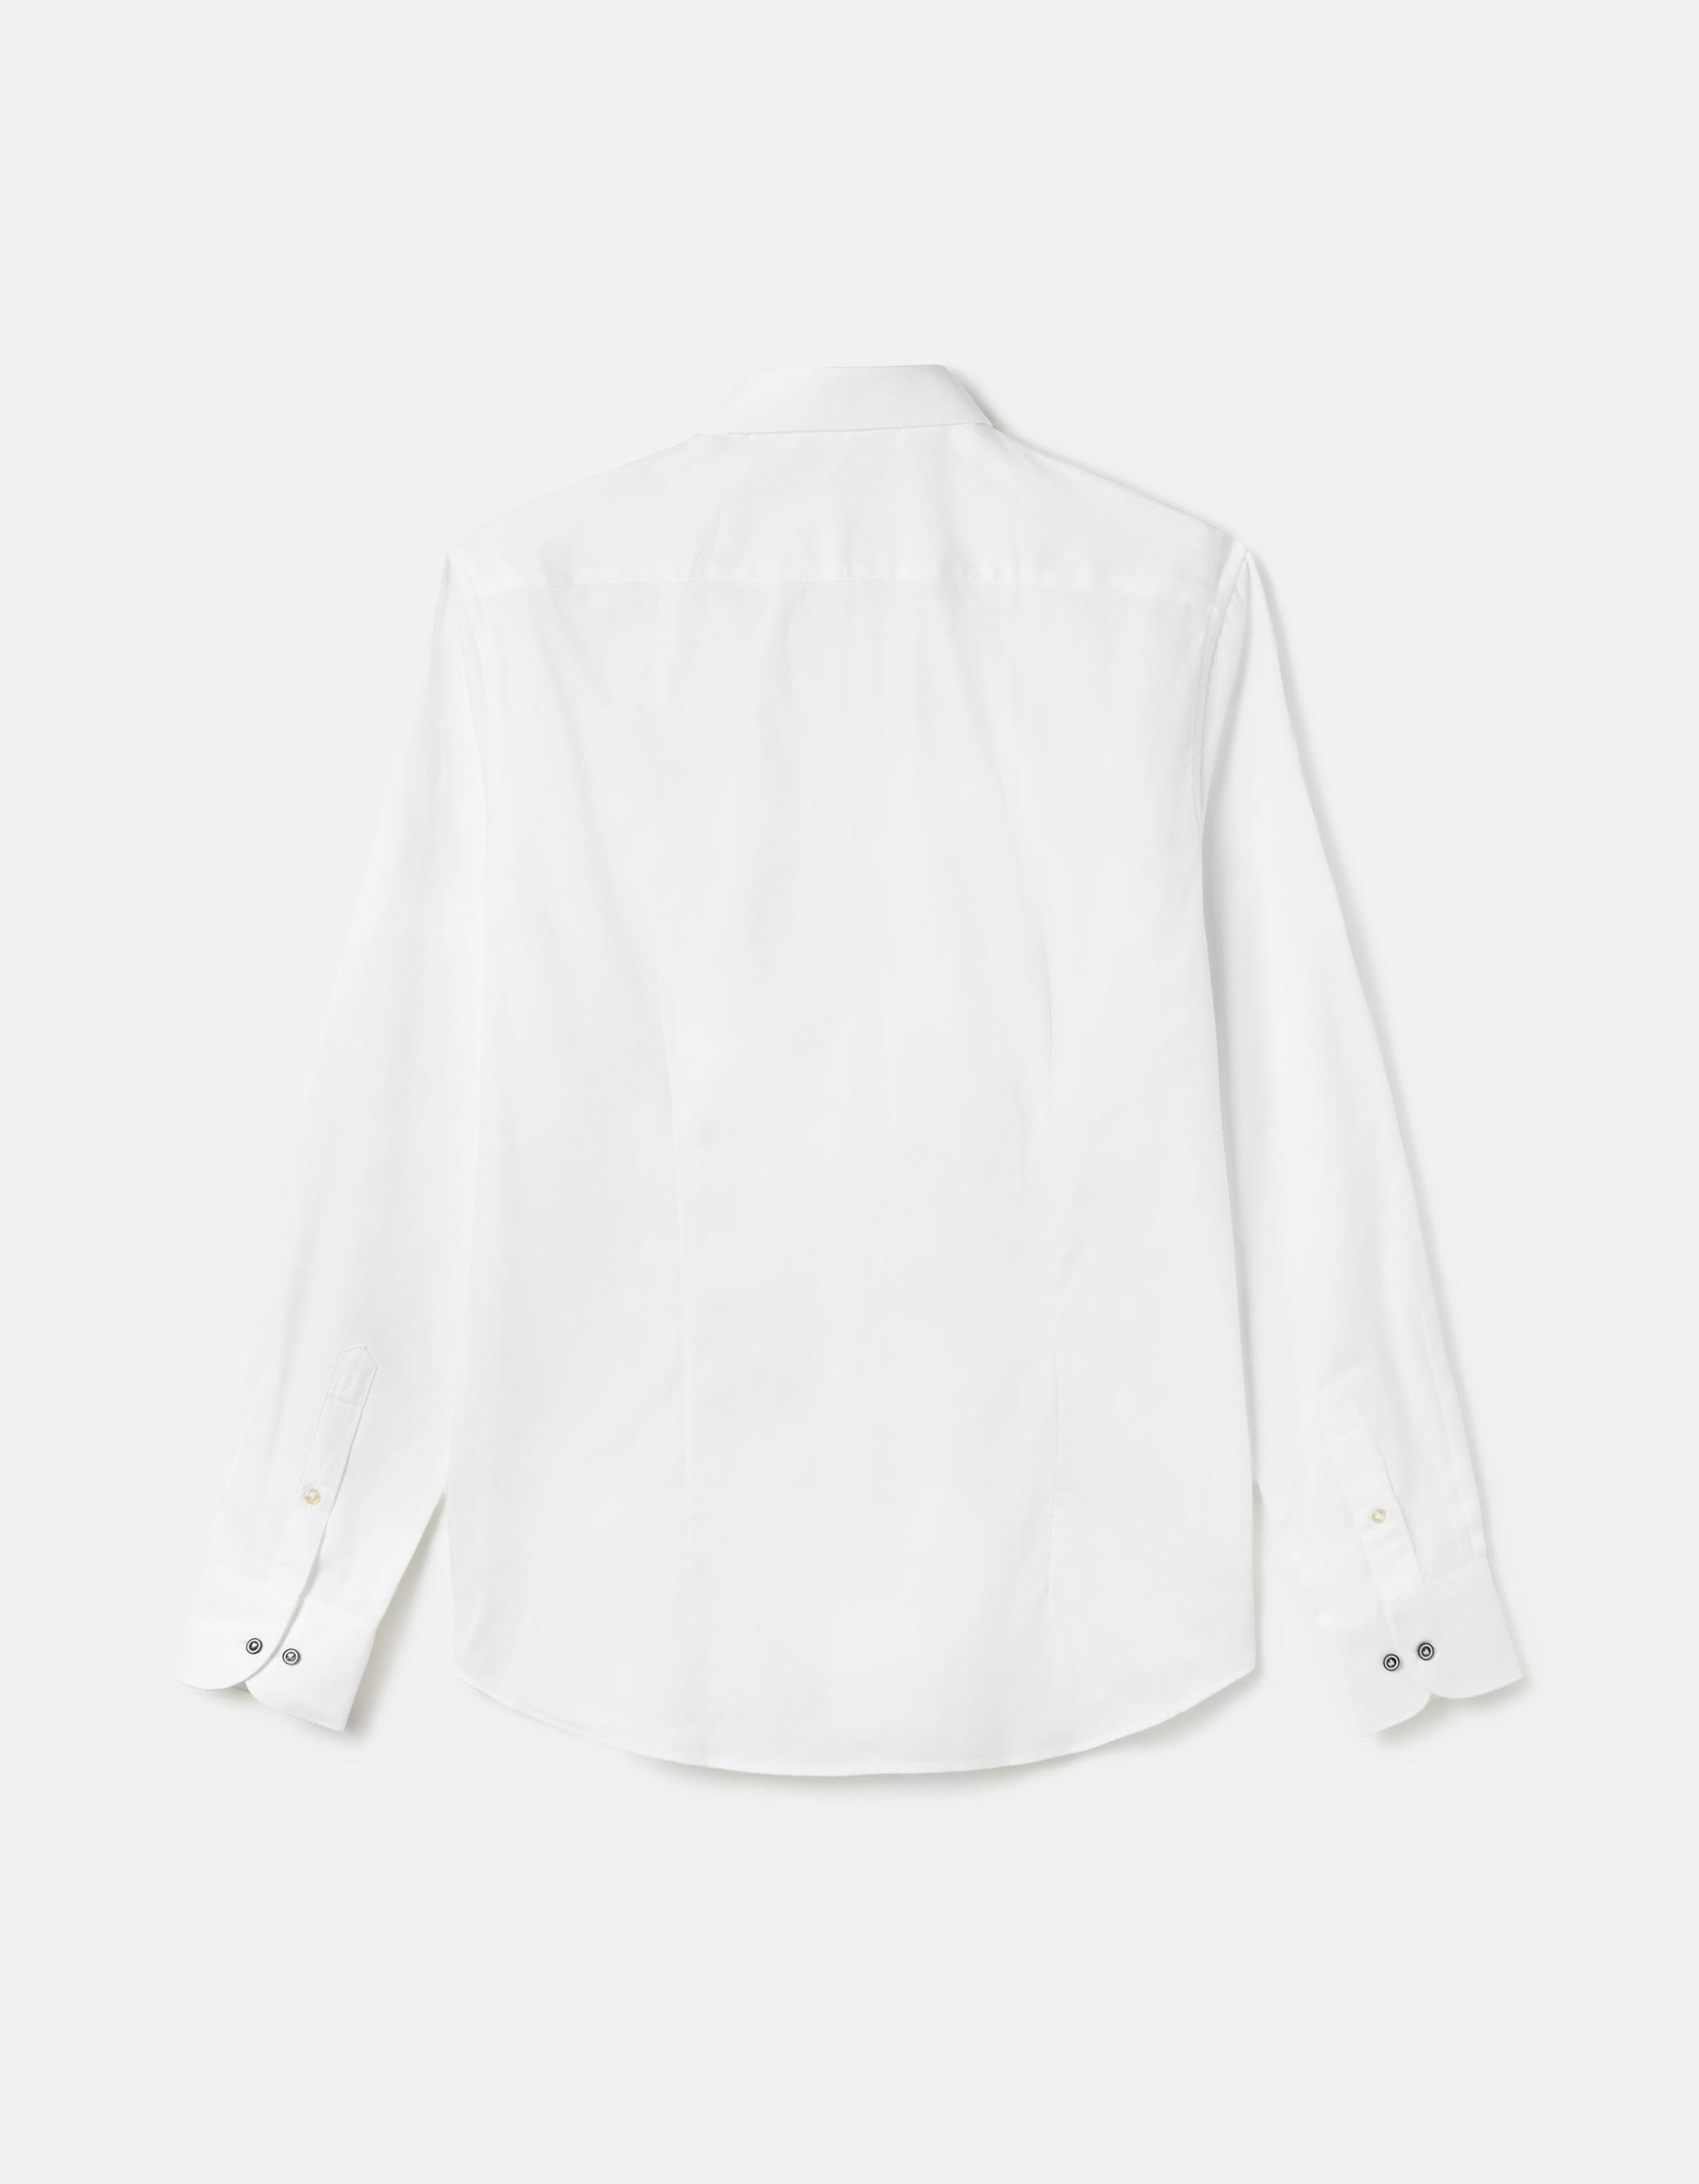 White dress shirt 1